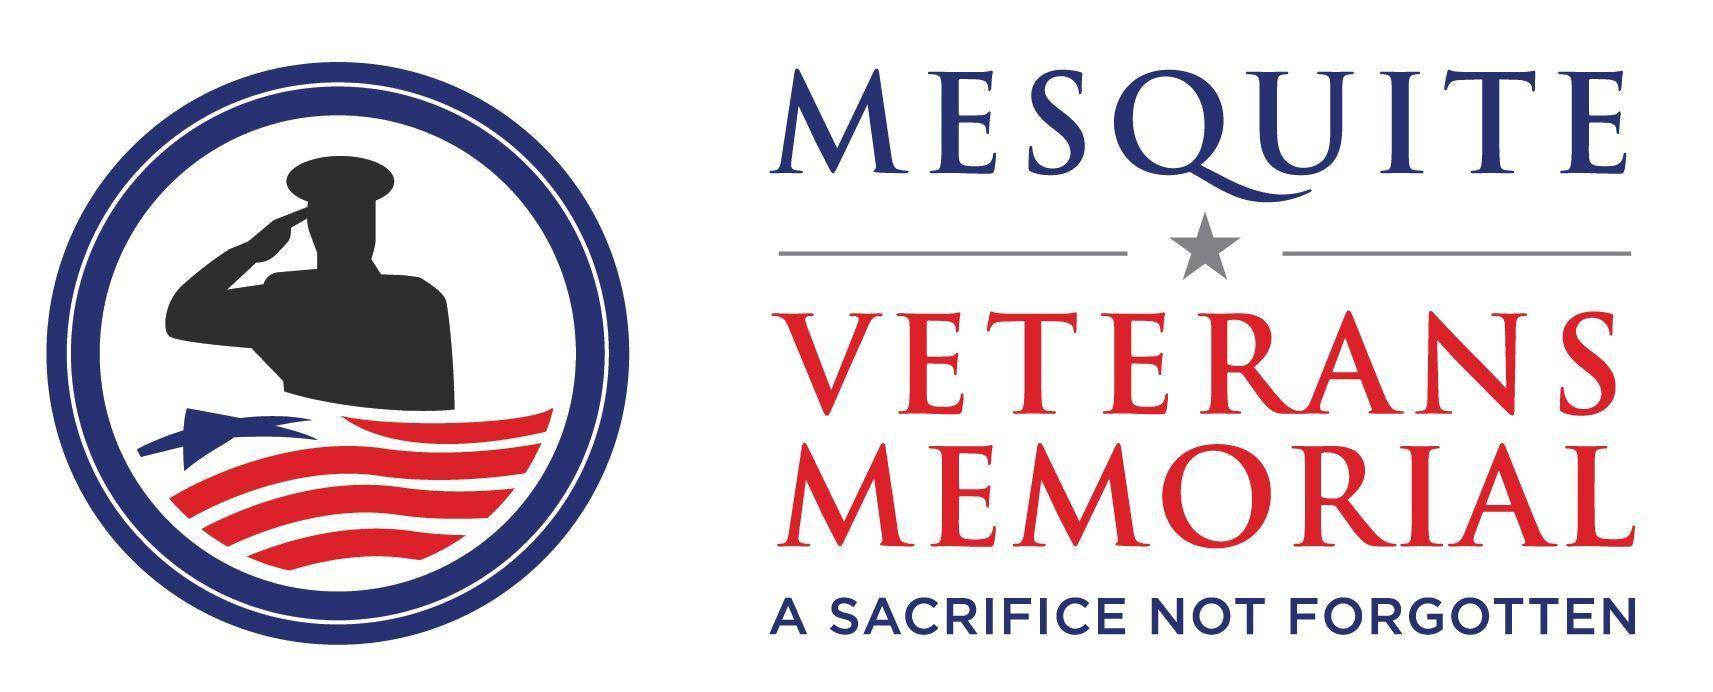 Veterans Logo - Mesquite Veterans Memorial | Mesquite, TX - Official Website